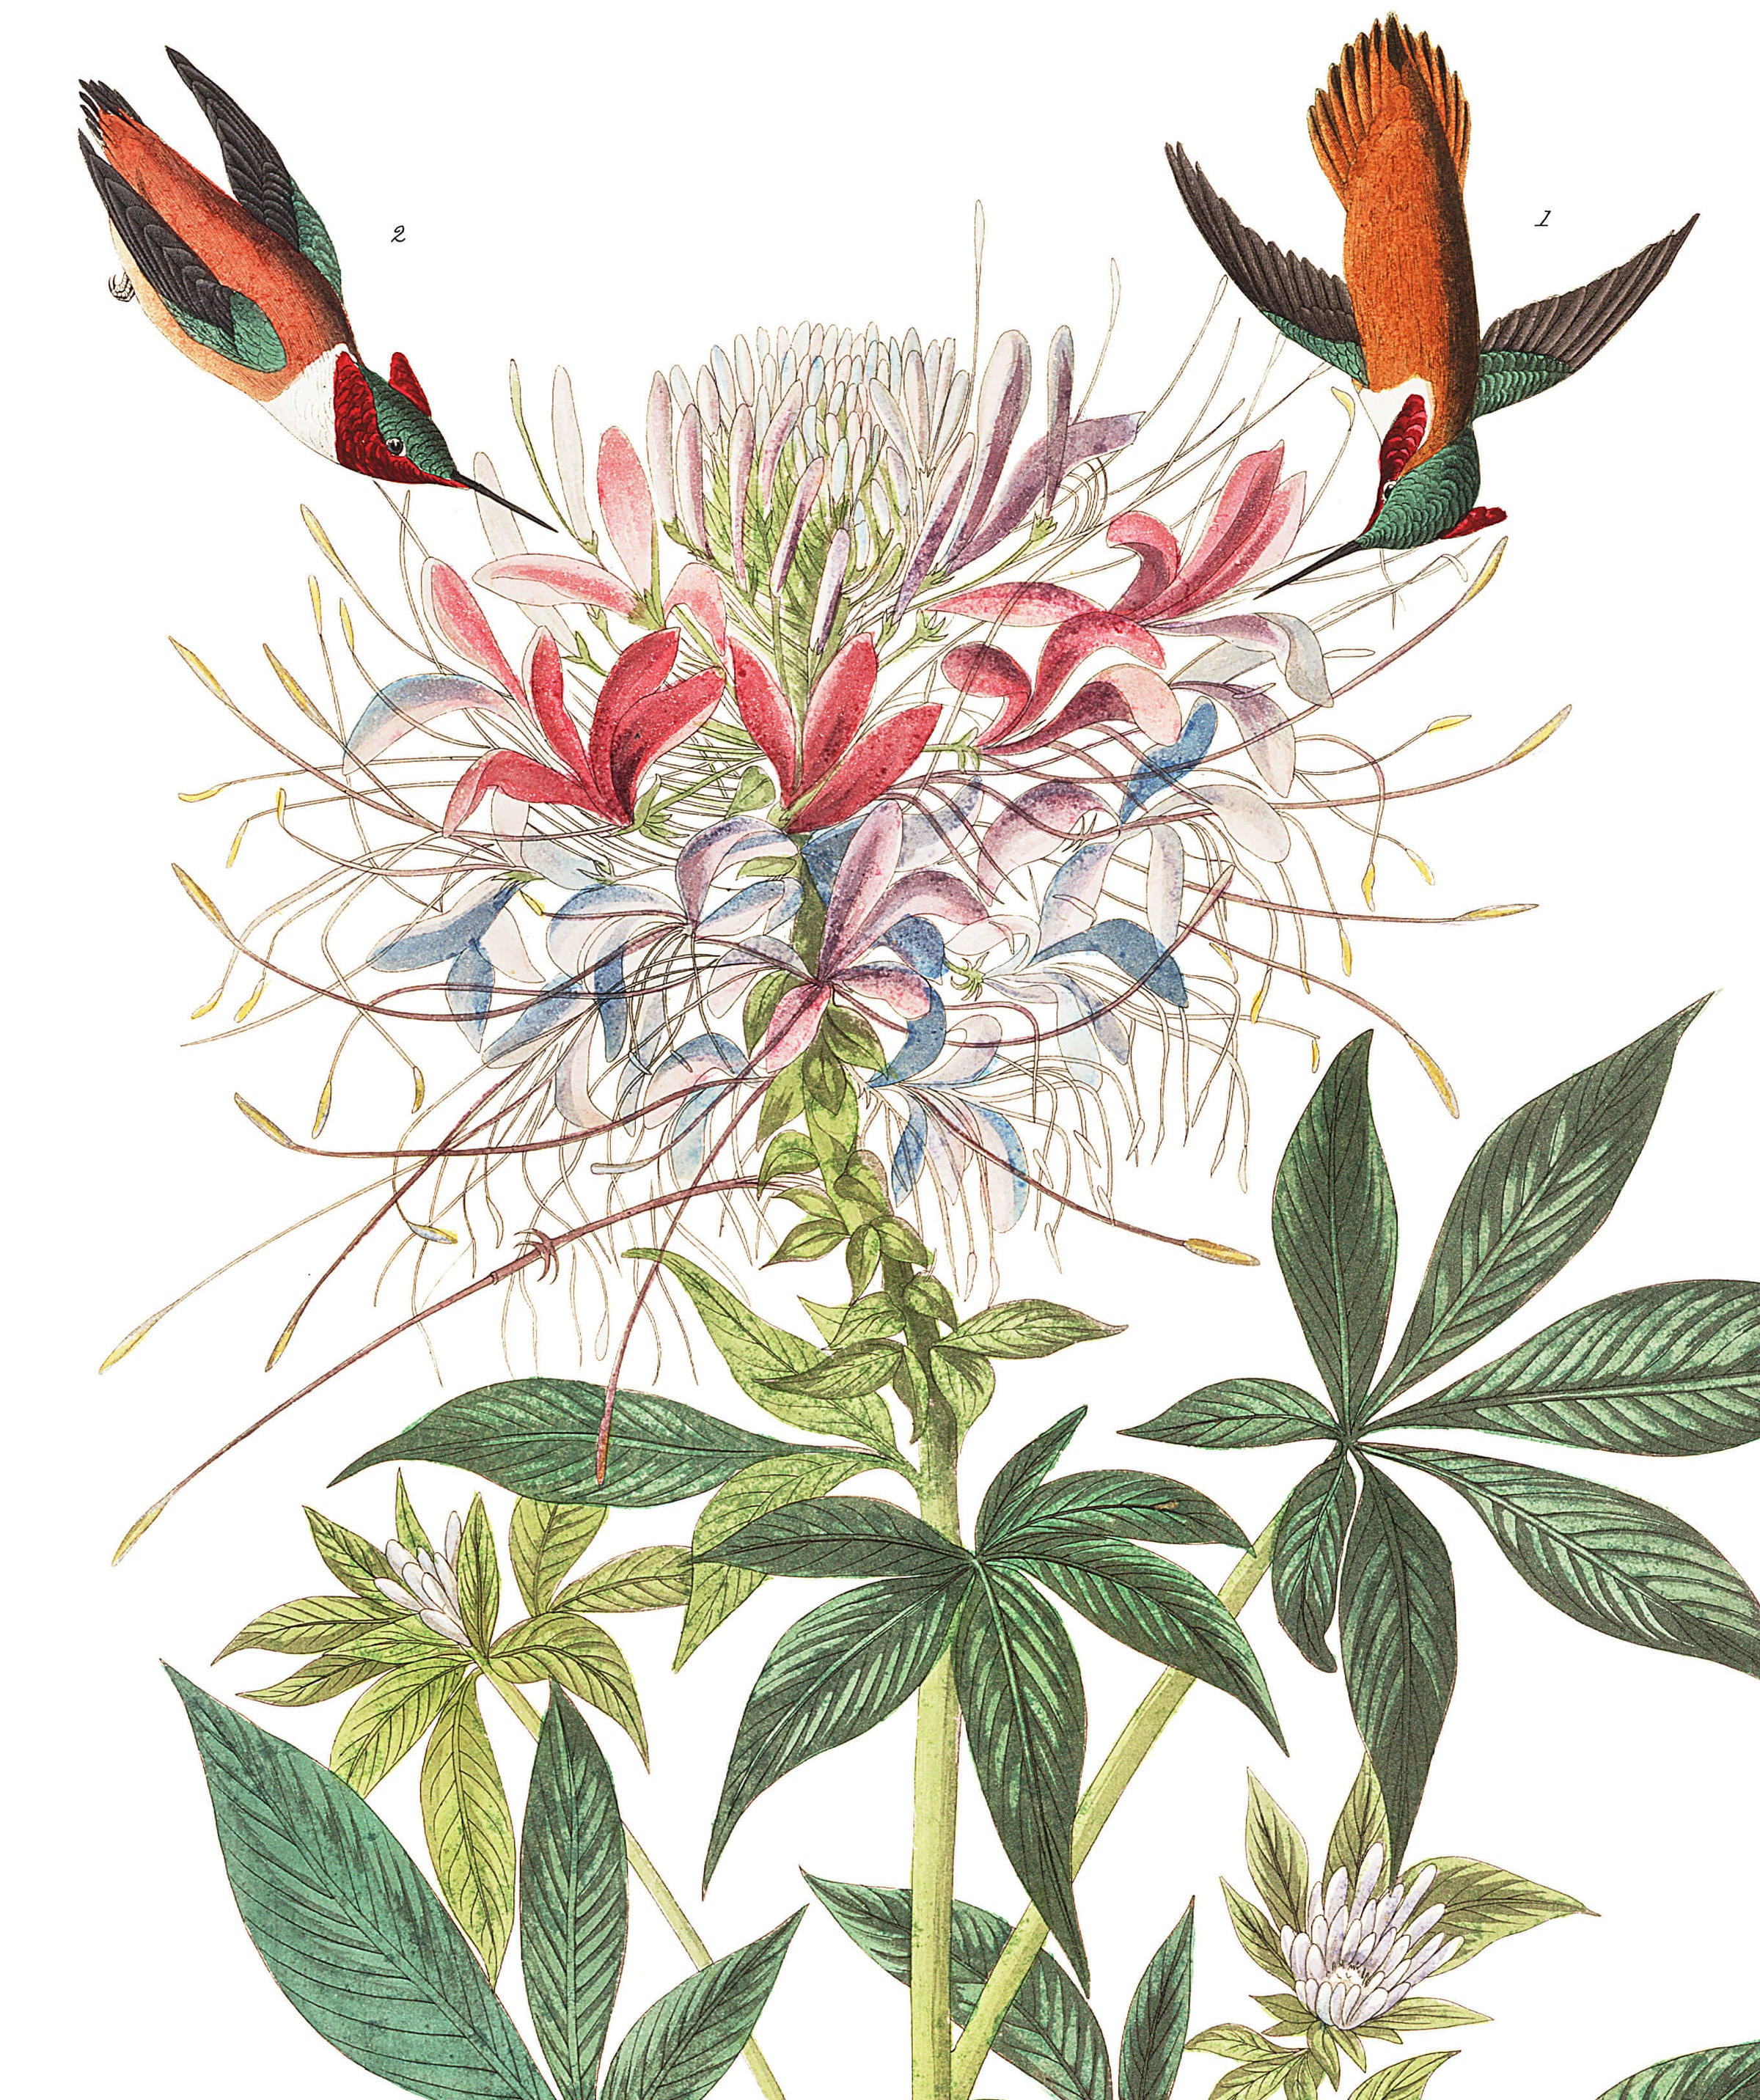 Ruff-necked Humming-bird | John James Audubon's Birds of America